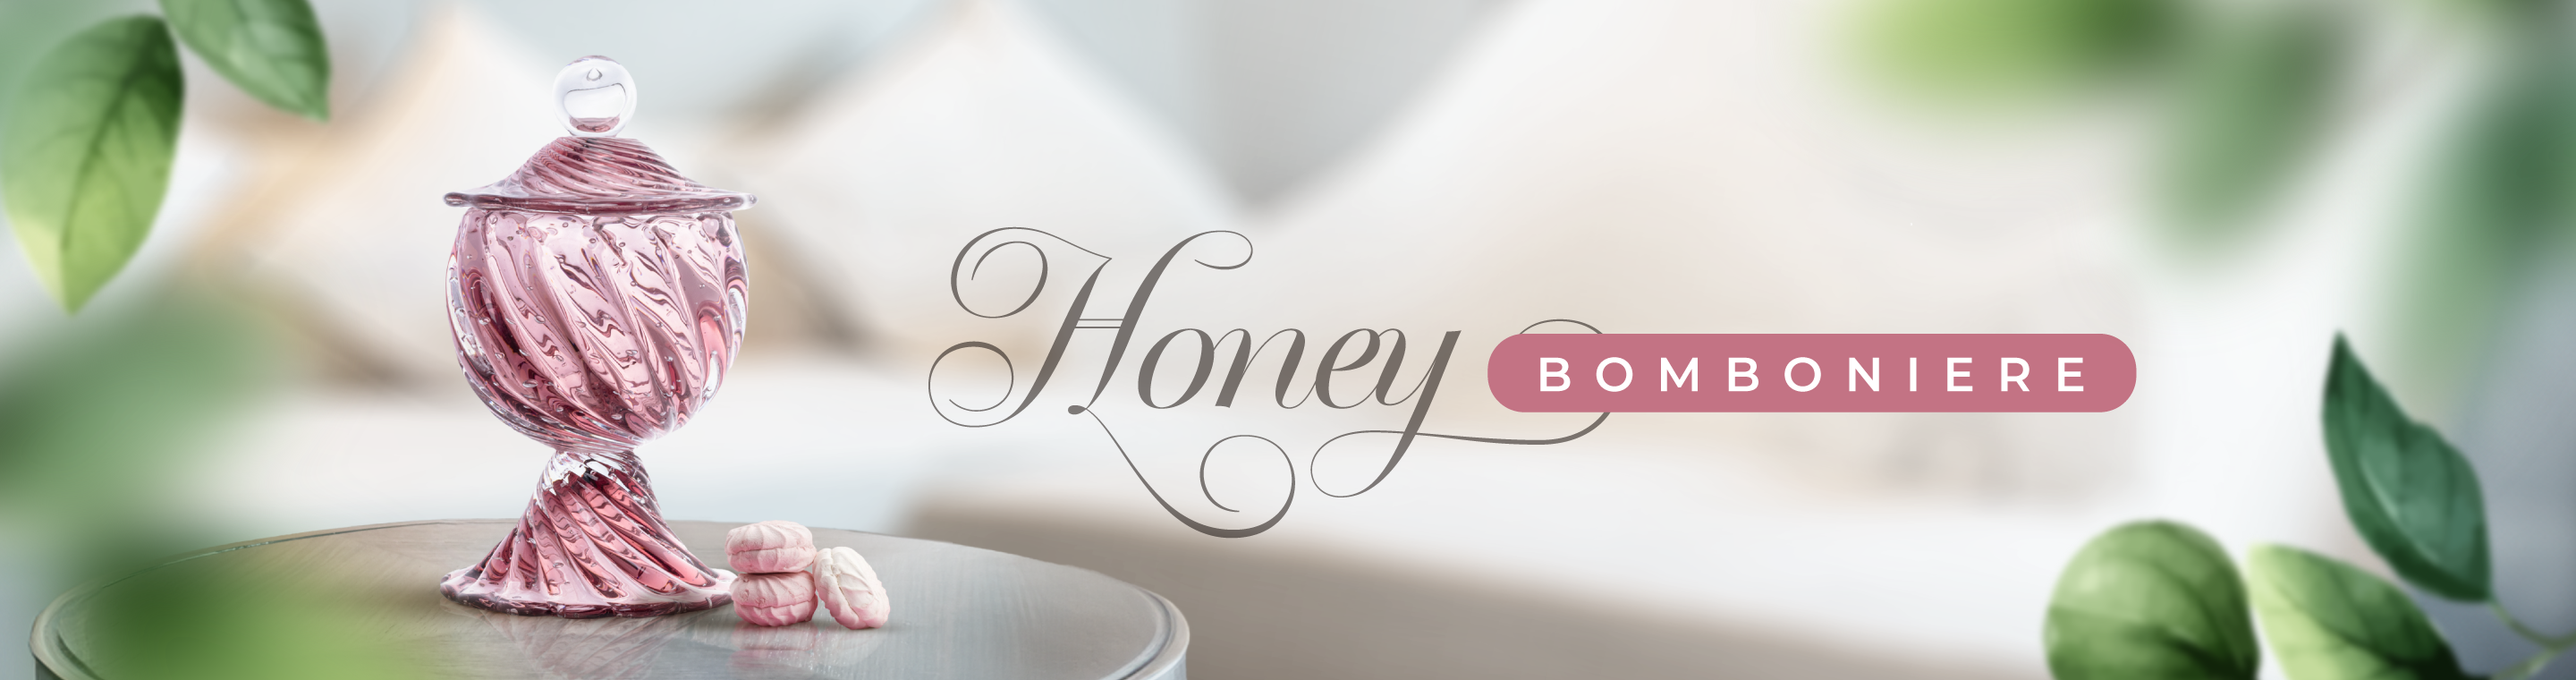 Bomboniere Honey em Cristal Murano